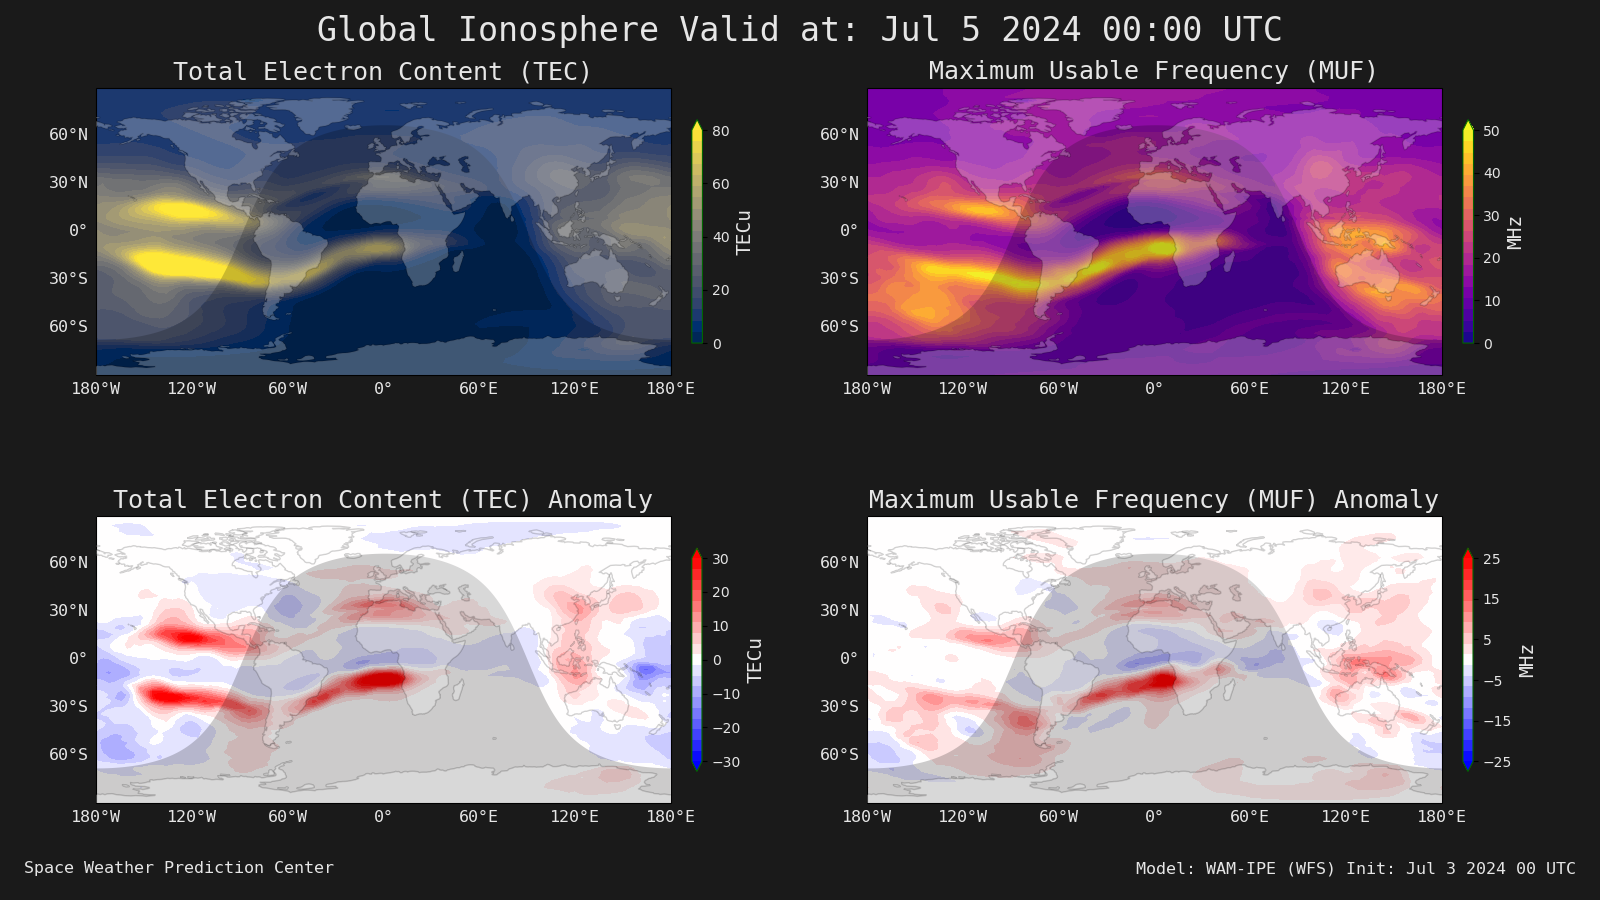 WAM-IPE Prev Ionosphere Forecast